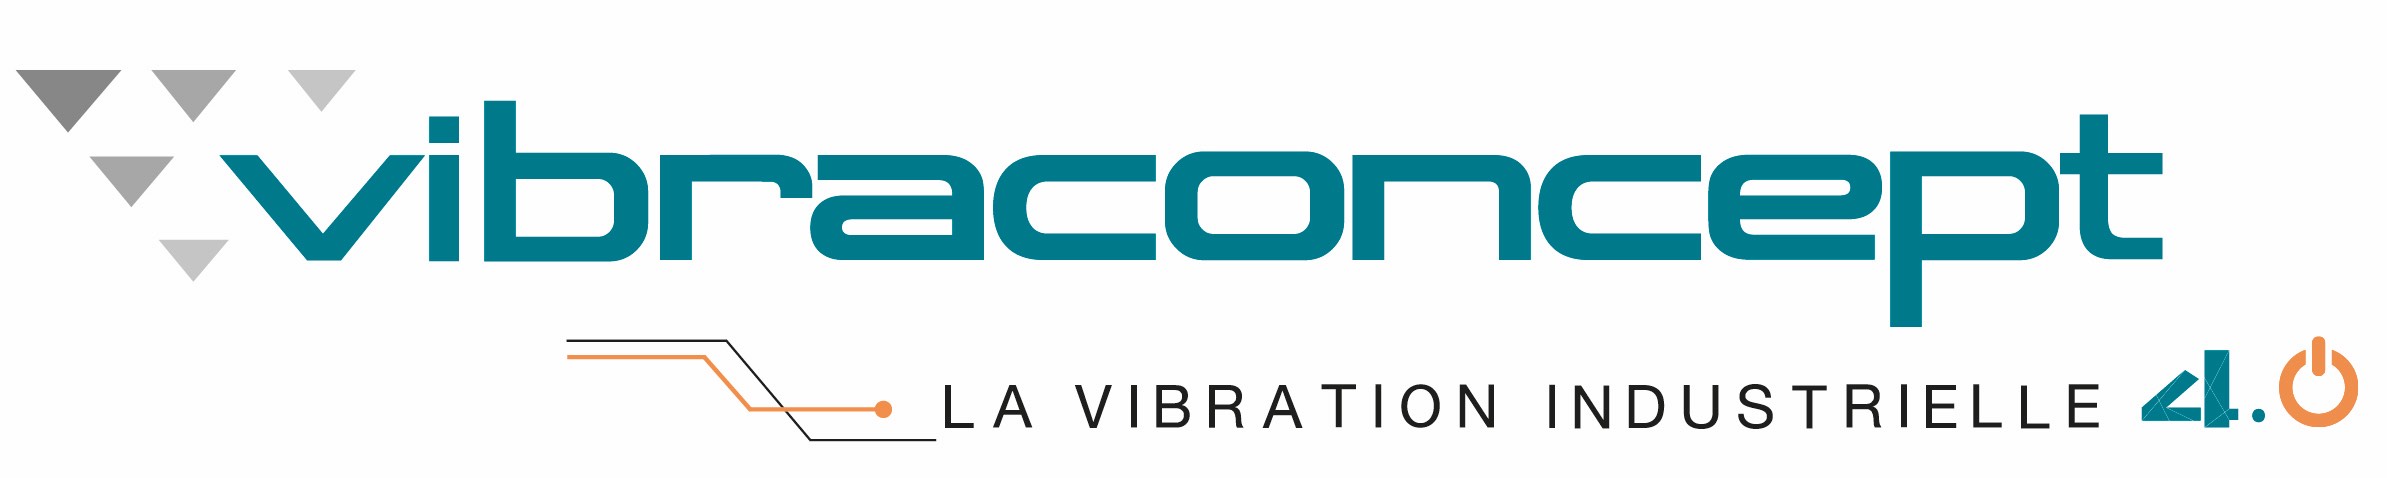 VIBRACONCEPT logo